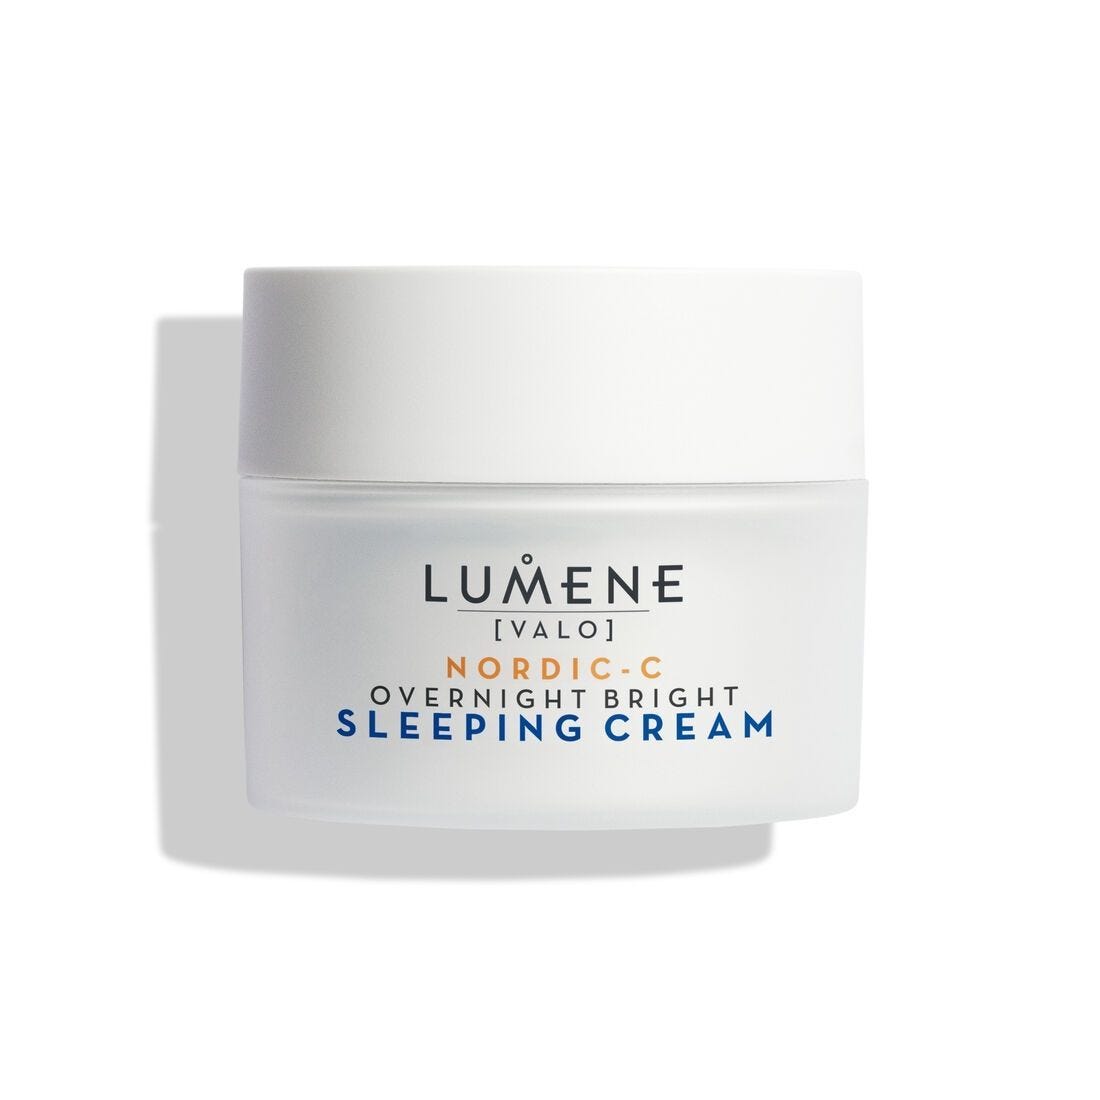 Overnight Bright Sleeping Cream - 50ml - Lumene